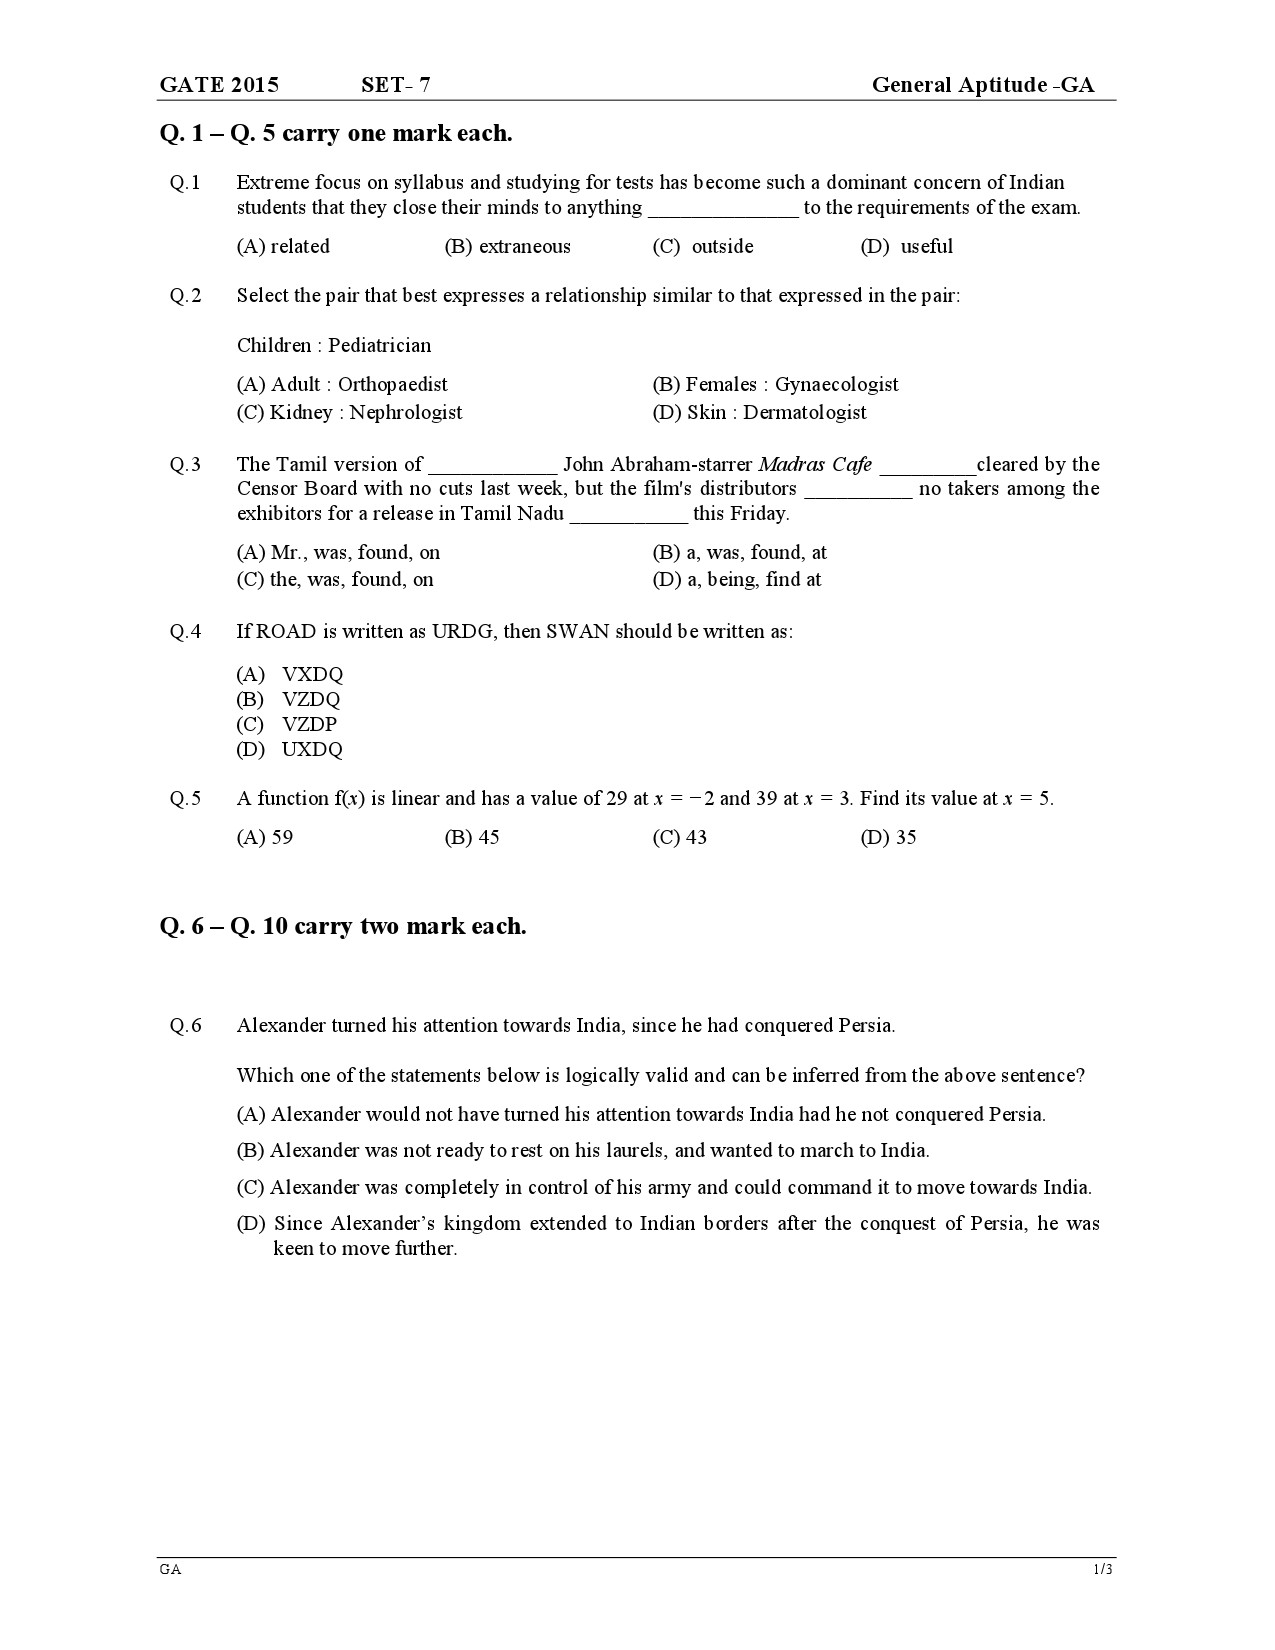 GATE Exam Question Paper 2015 General Aptitude 14